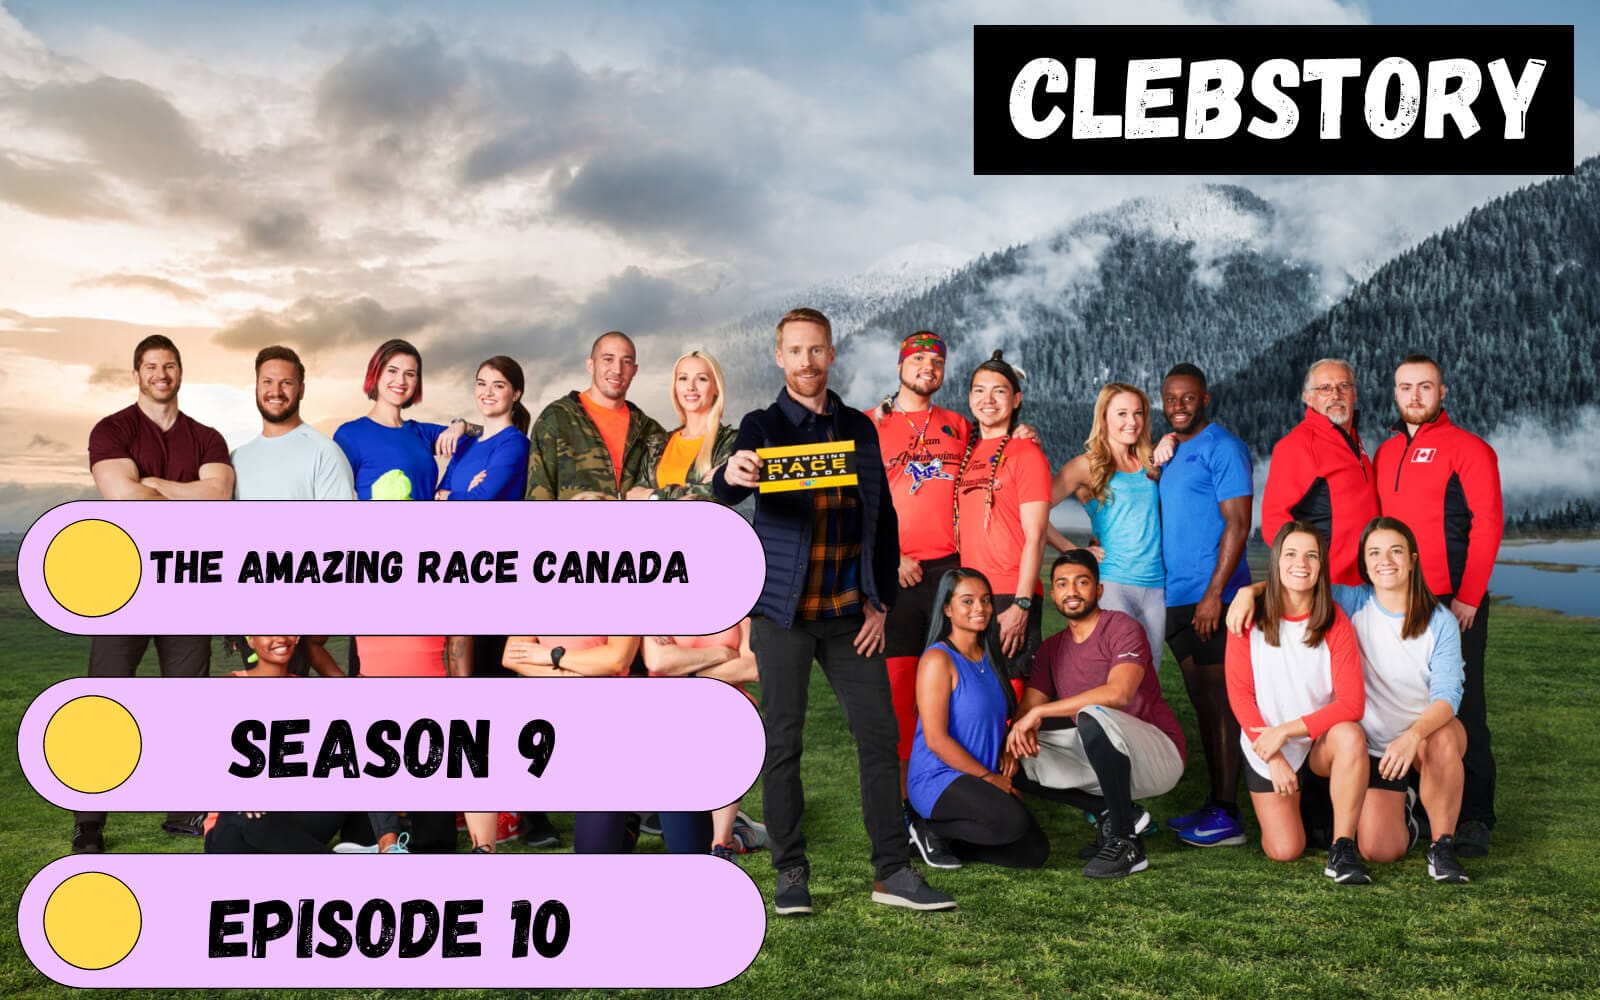 The Amazing Race Canada Season 9 Episode 10